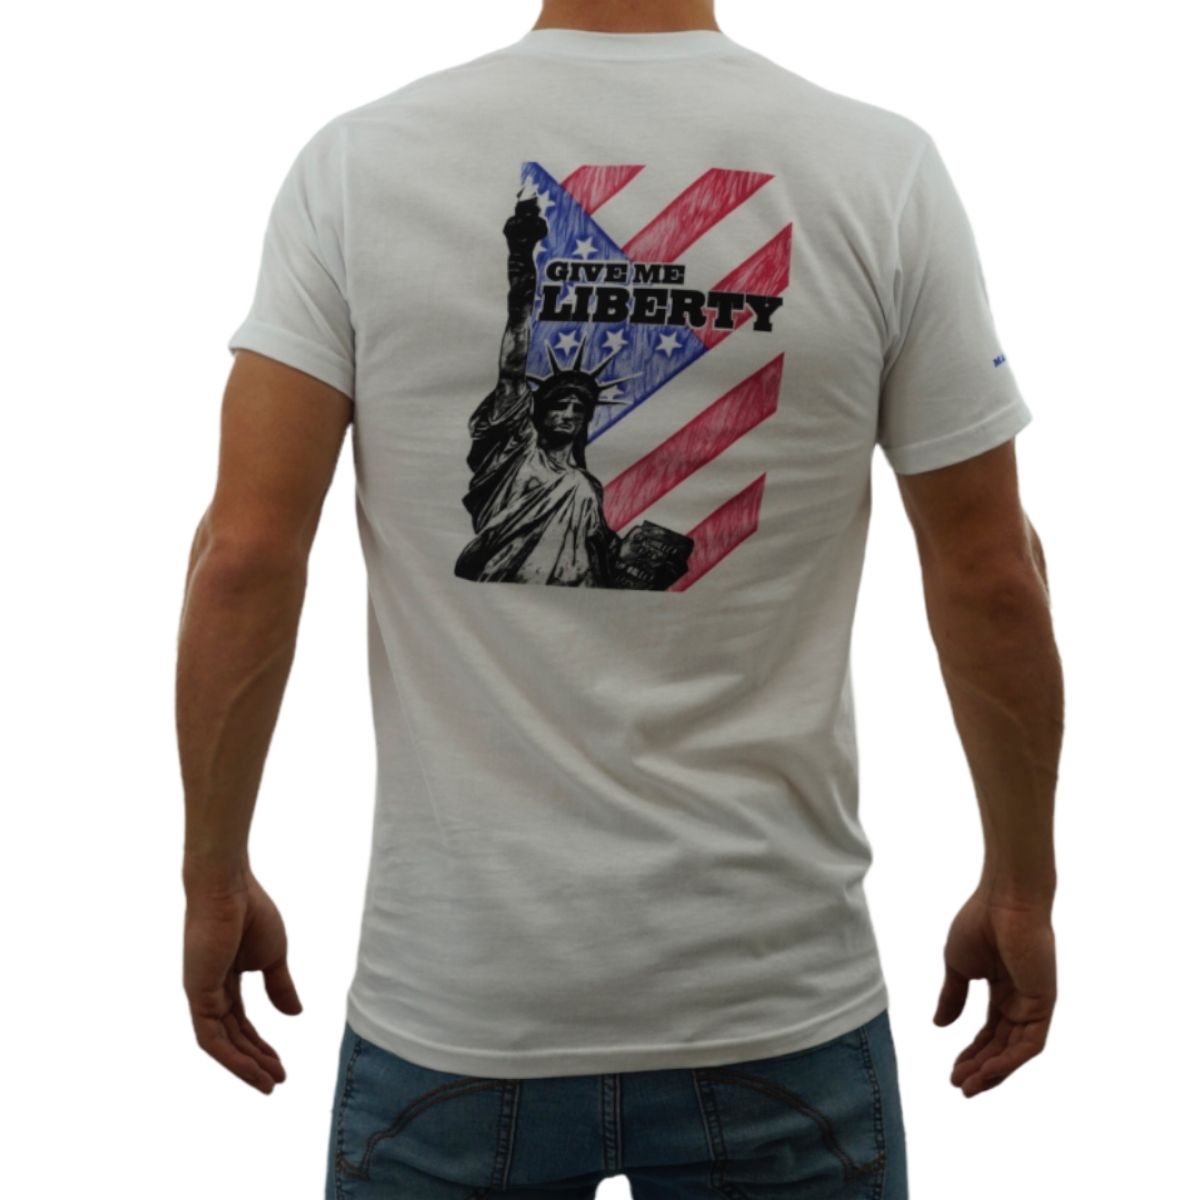 CALI Strong Give Me Liberty T-Shirt White - T-Shirt - Image 3 - CALI Strong